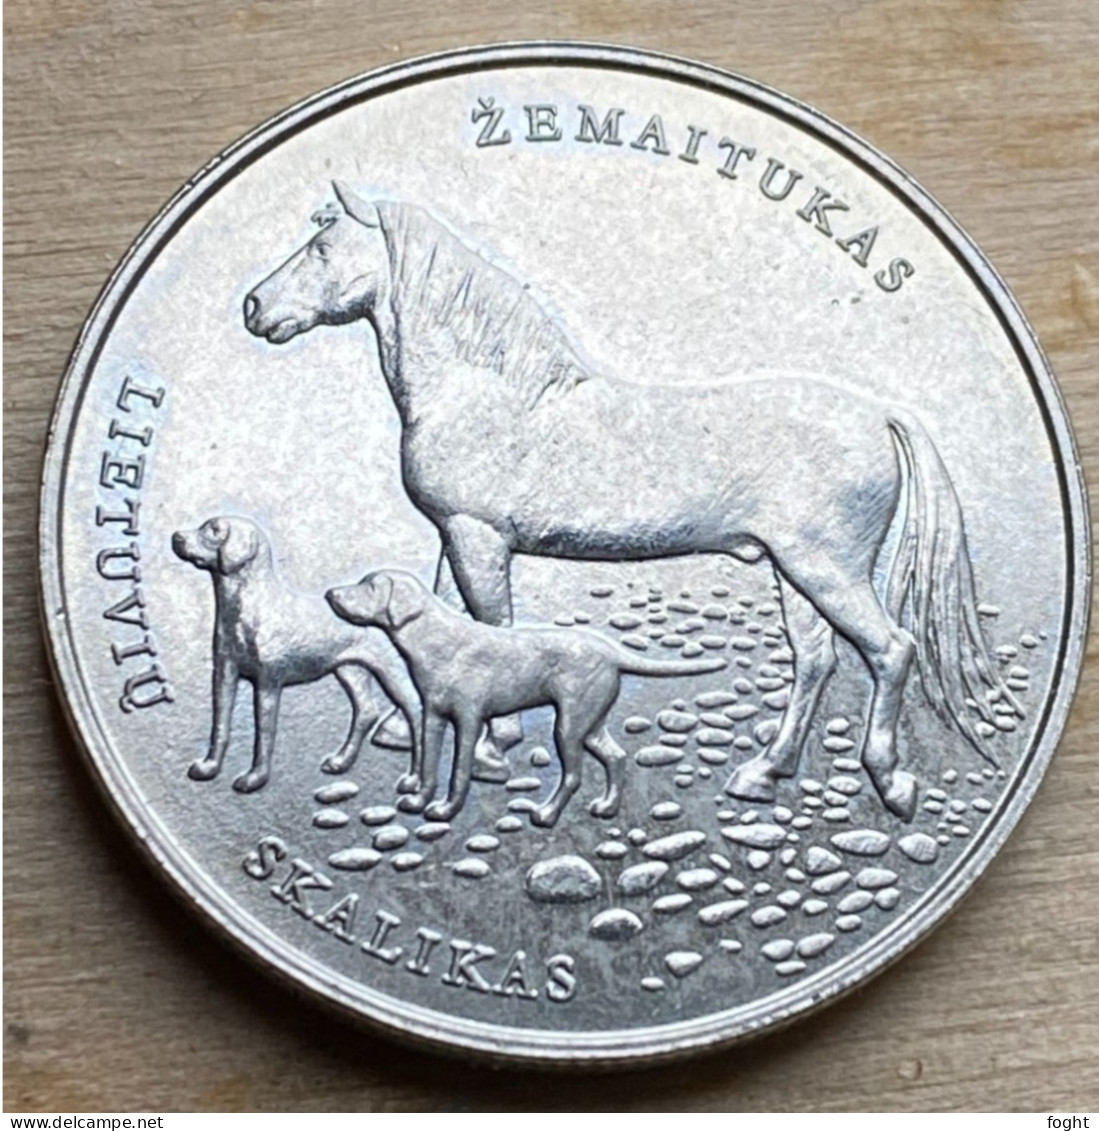 2017 LMK Lithuania "Lithuanian Hounds And Horse" 1.5 Euro Coin,KM#225,7121 - Litauen